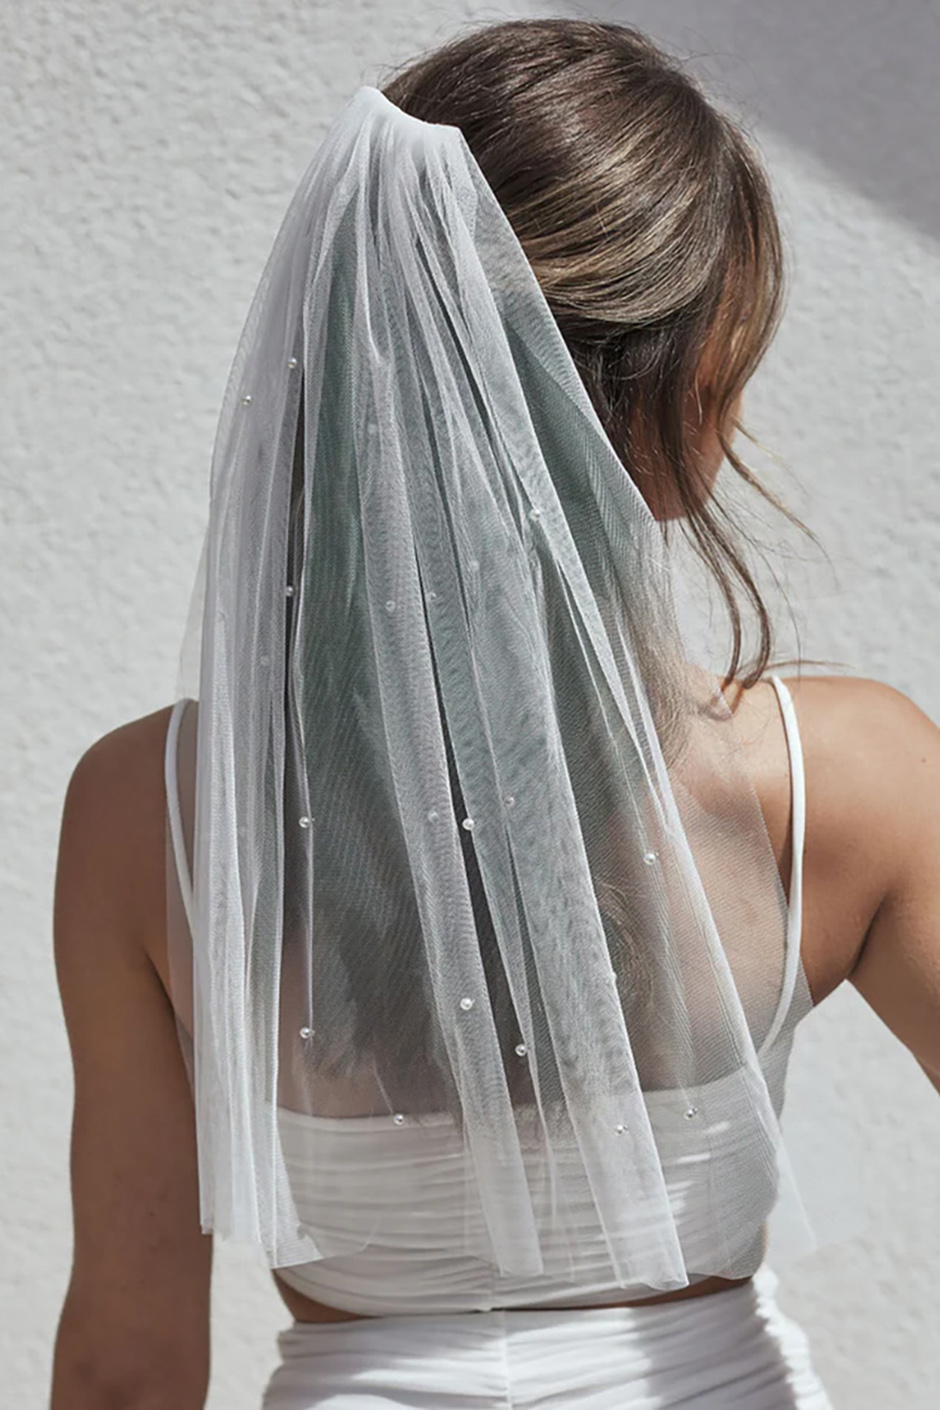 pearl-wedding-veil-six-stories.jpg